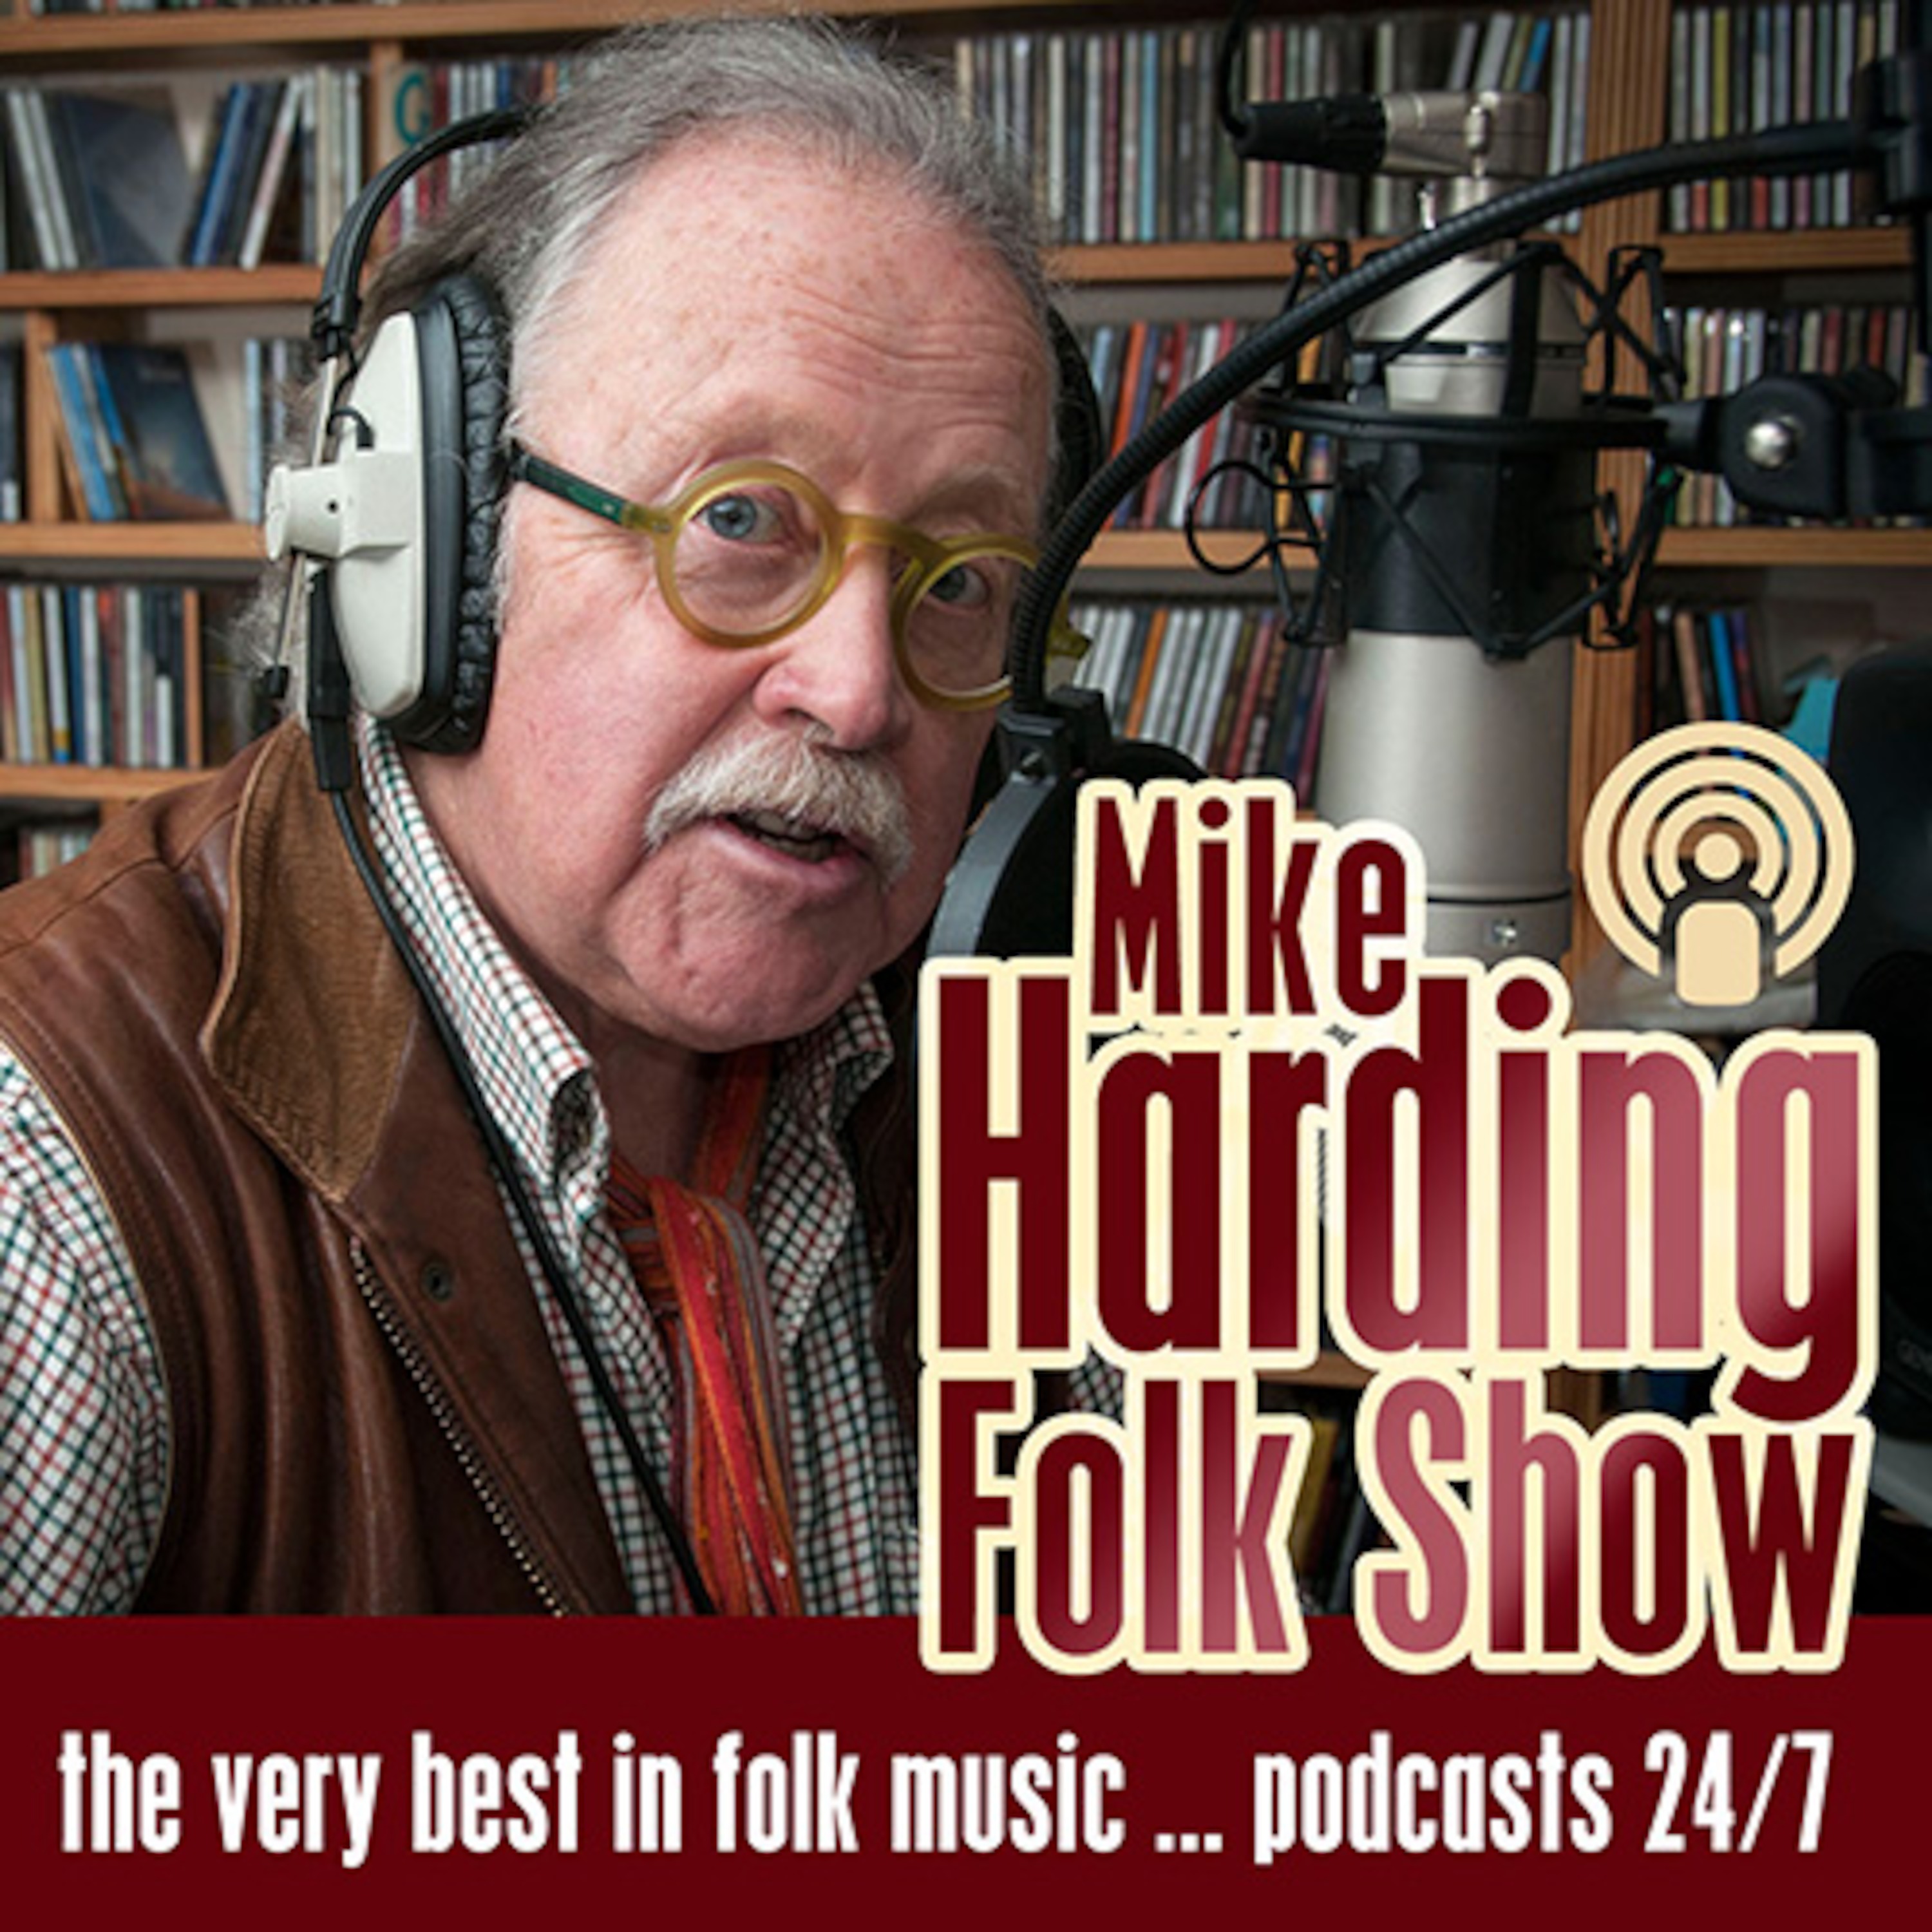 Mike Harding Folk Show 136